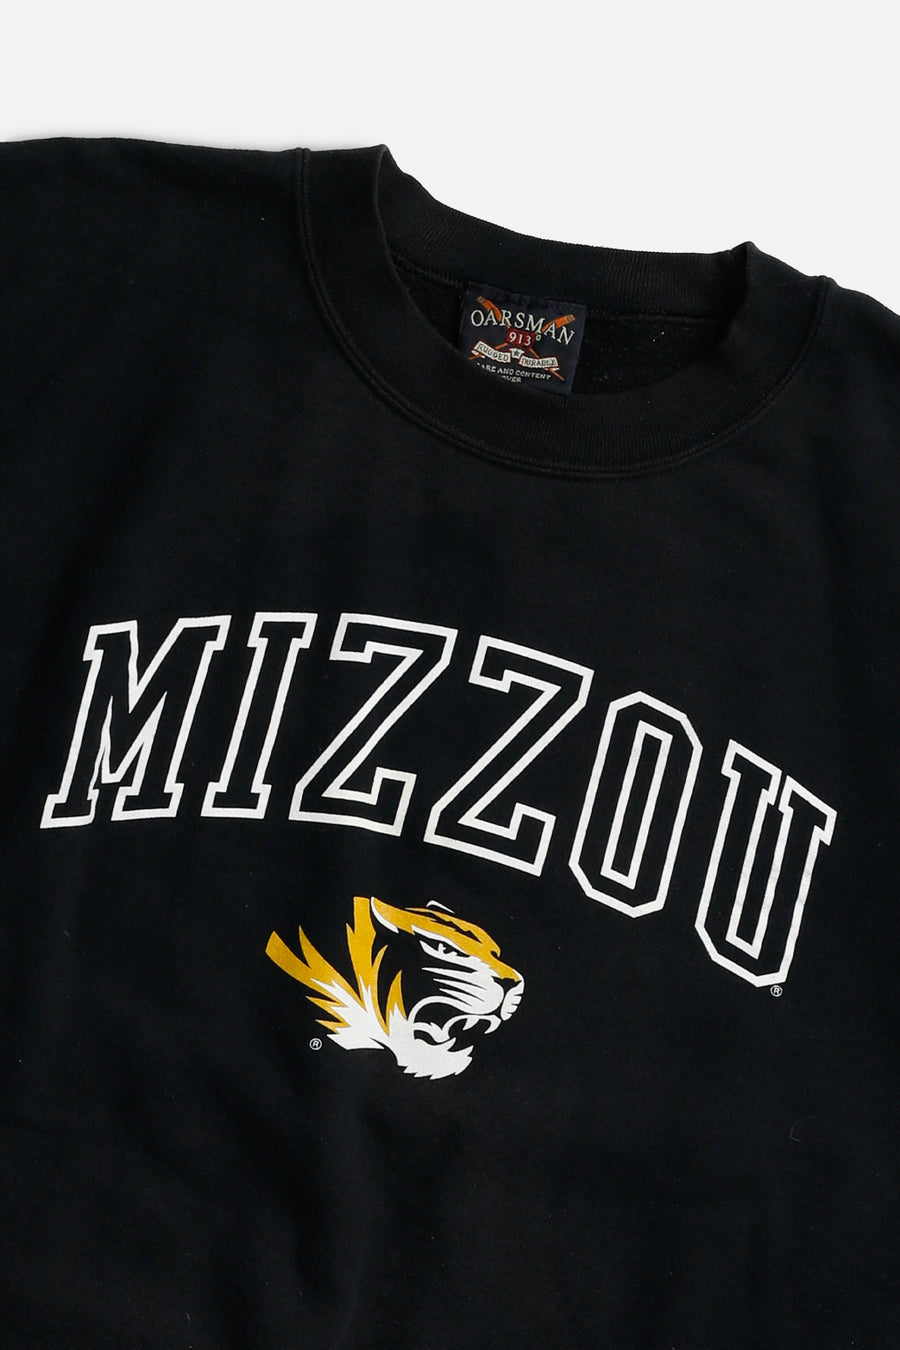 Vintage Missouri Tigers Sweatshirt - XL